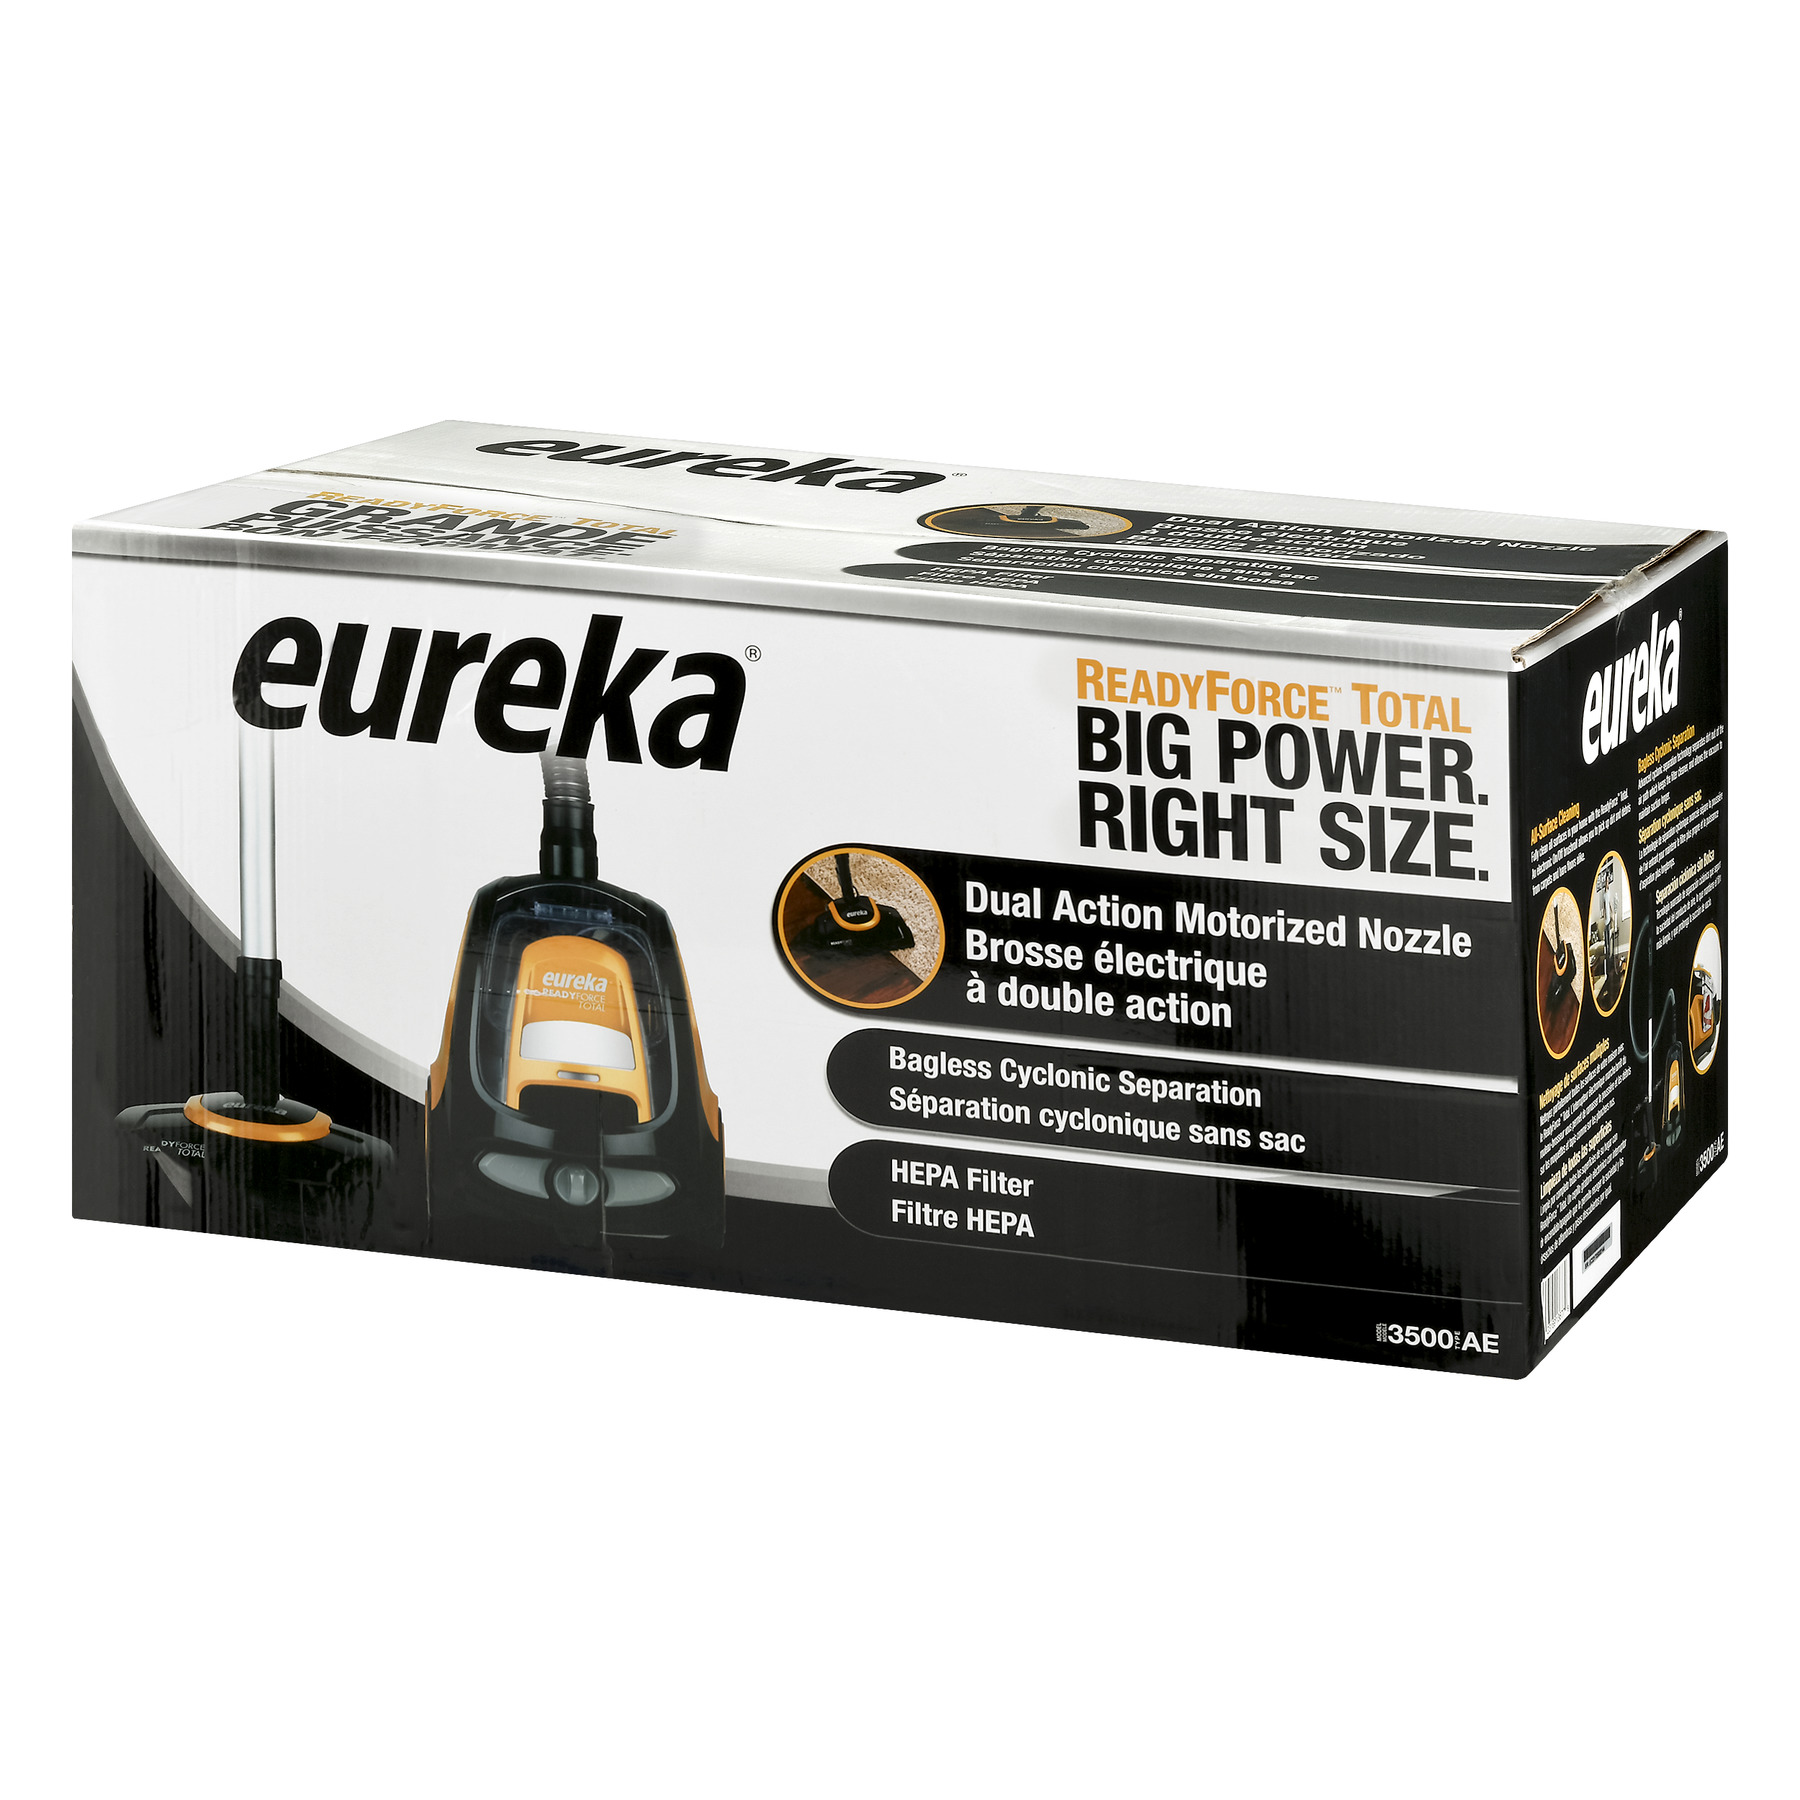 Eureka ReadyForce Total Bagless Canister Vacuum, 3500AE - image 3 of 7